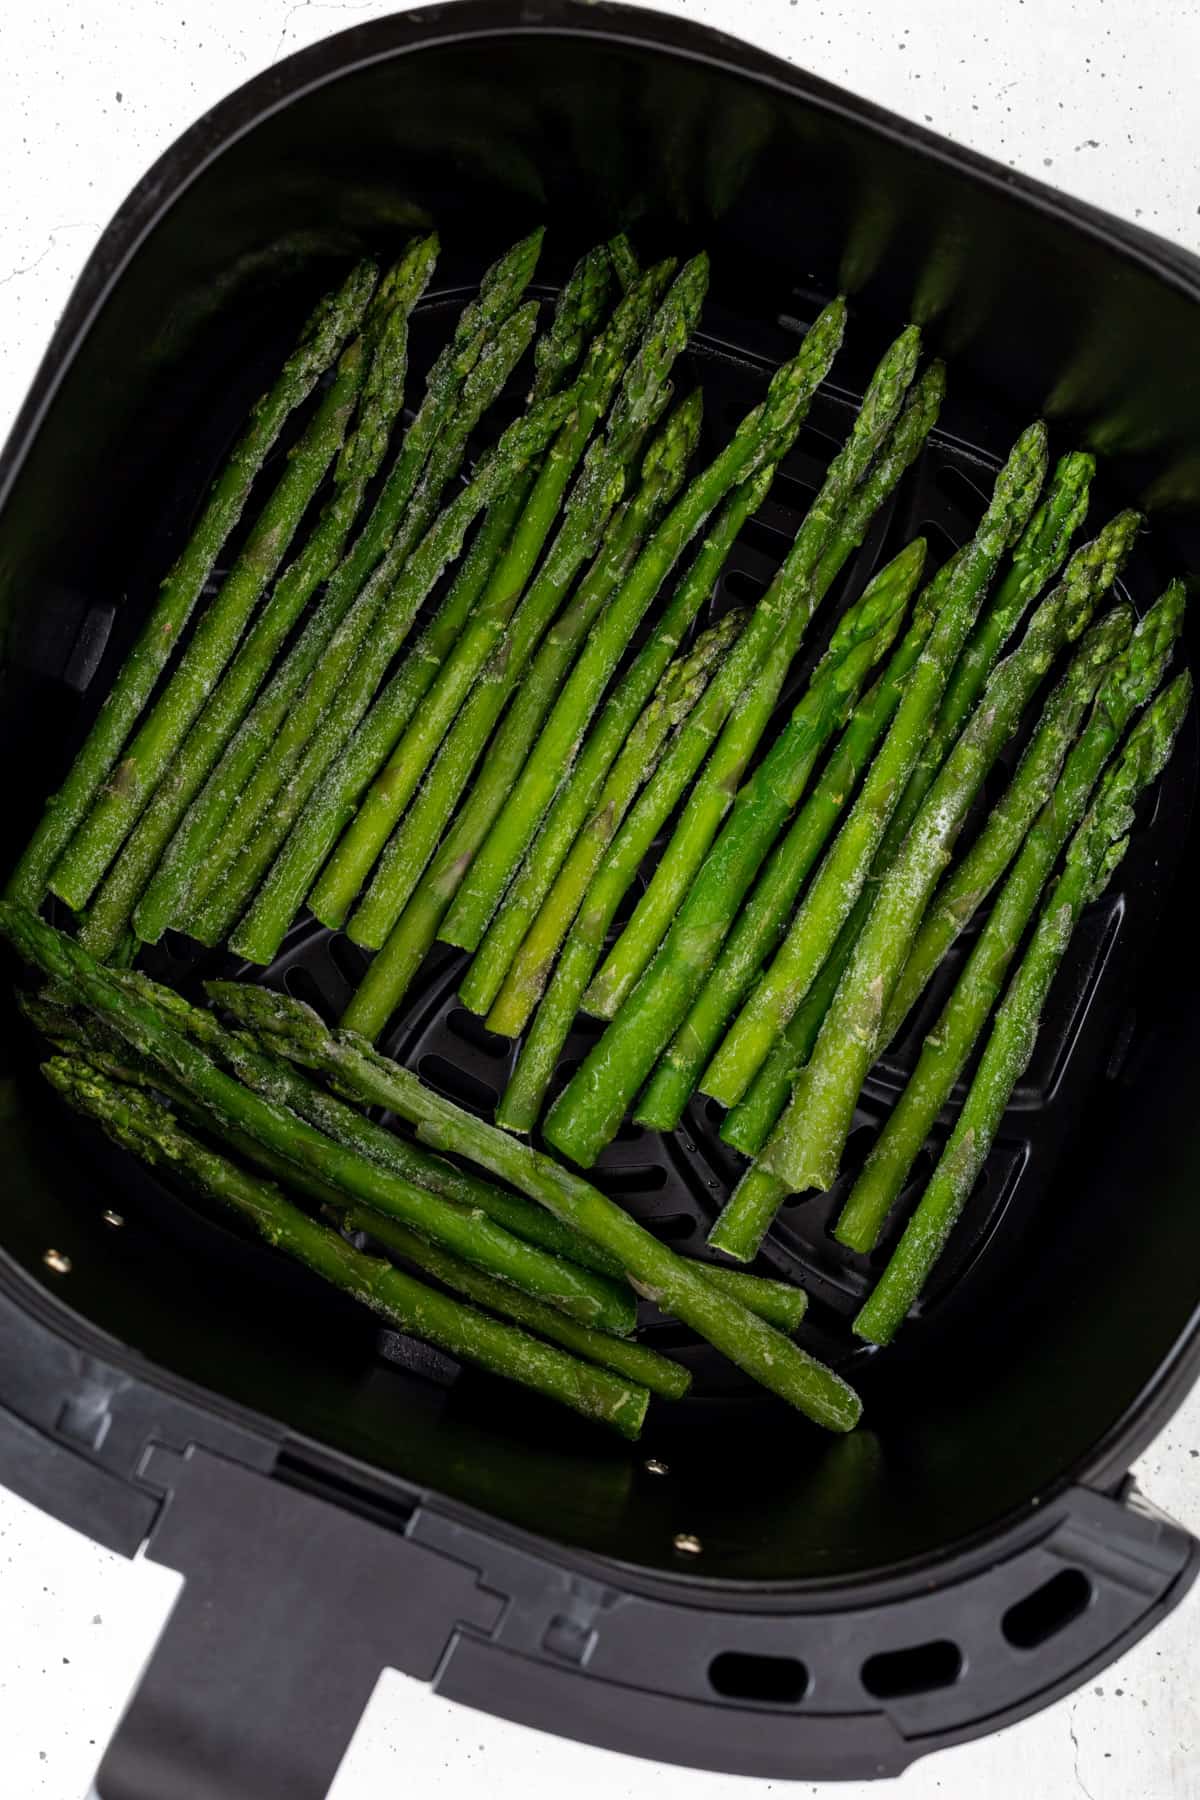 Uncooked frozen asparagus in an air fryer basket.